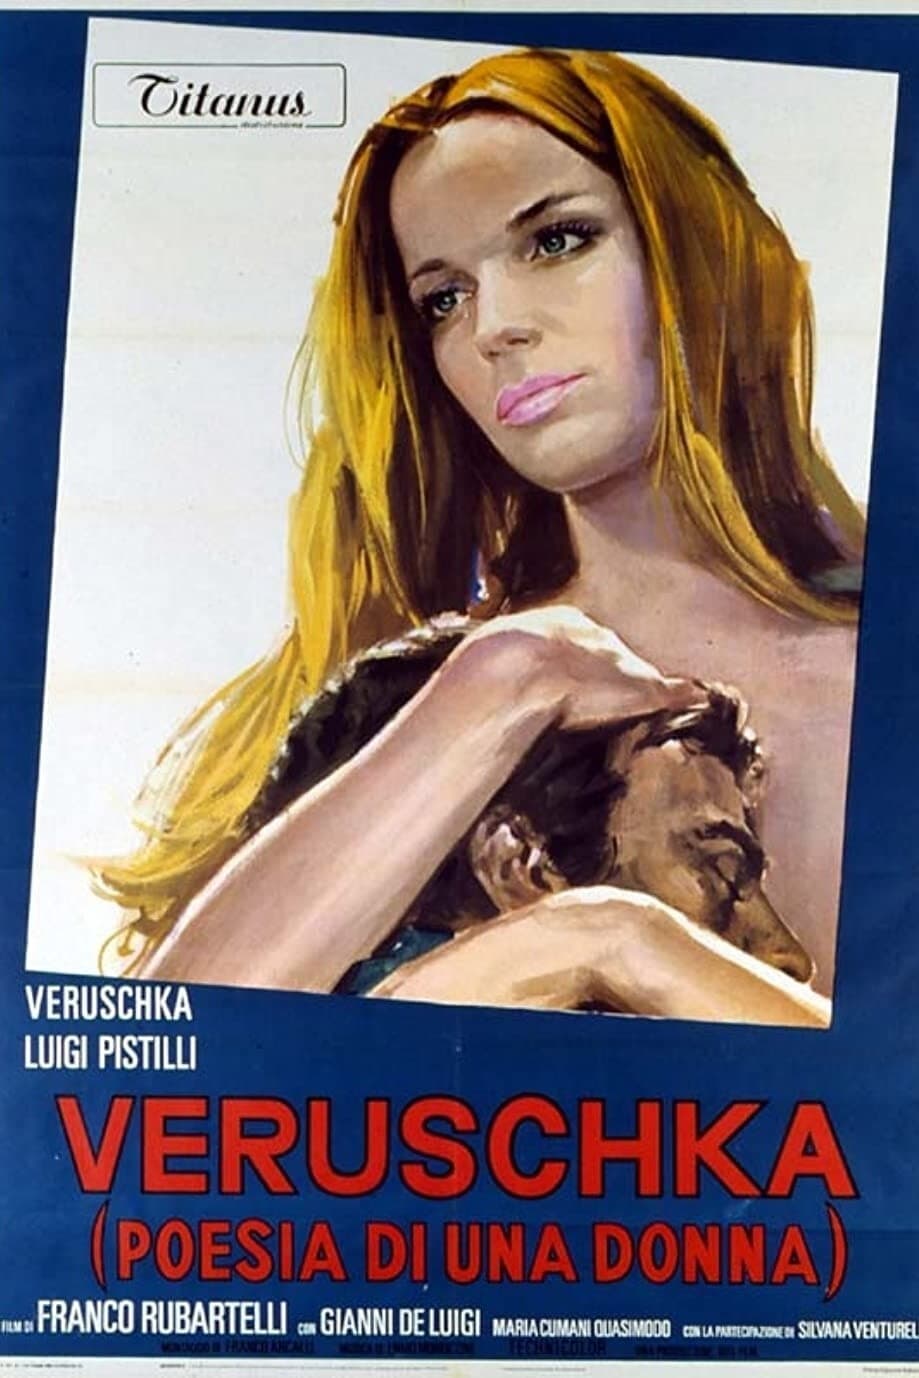 Veruschka - Poetry of a Woman